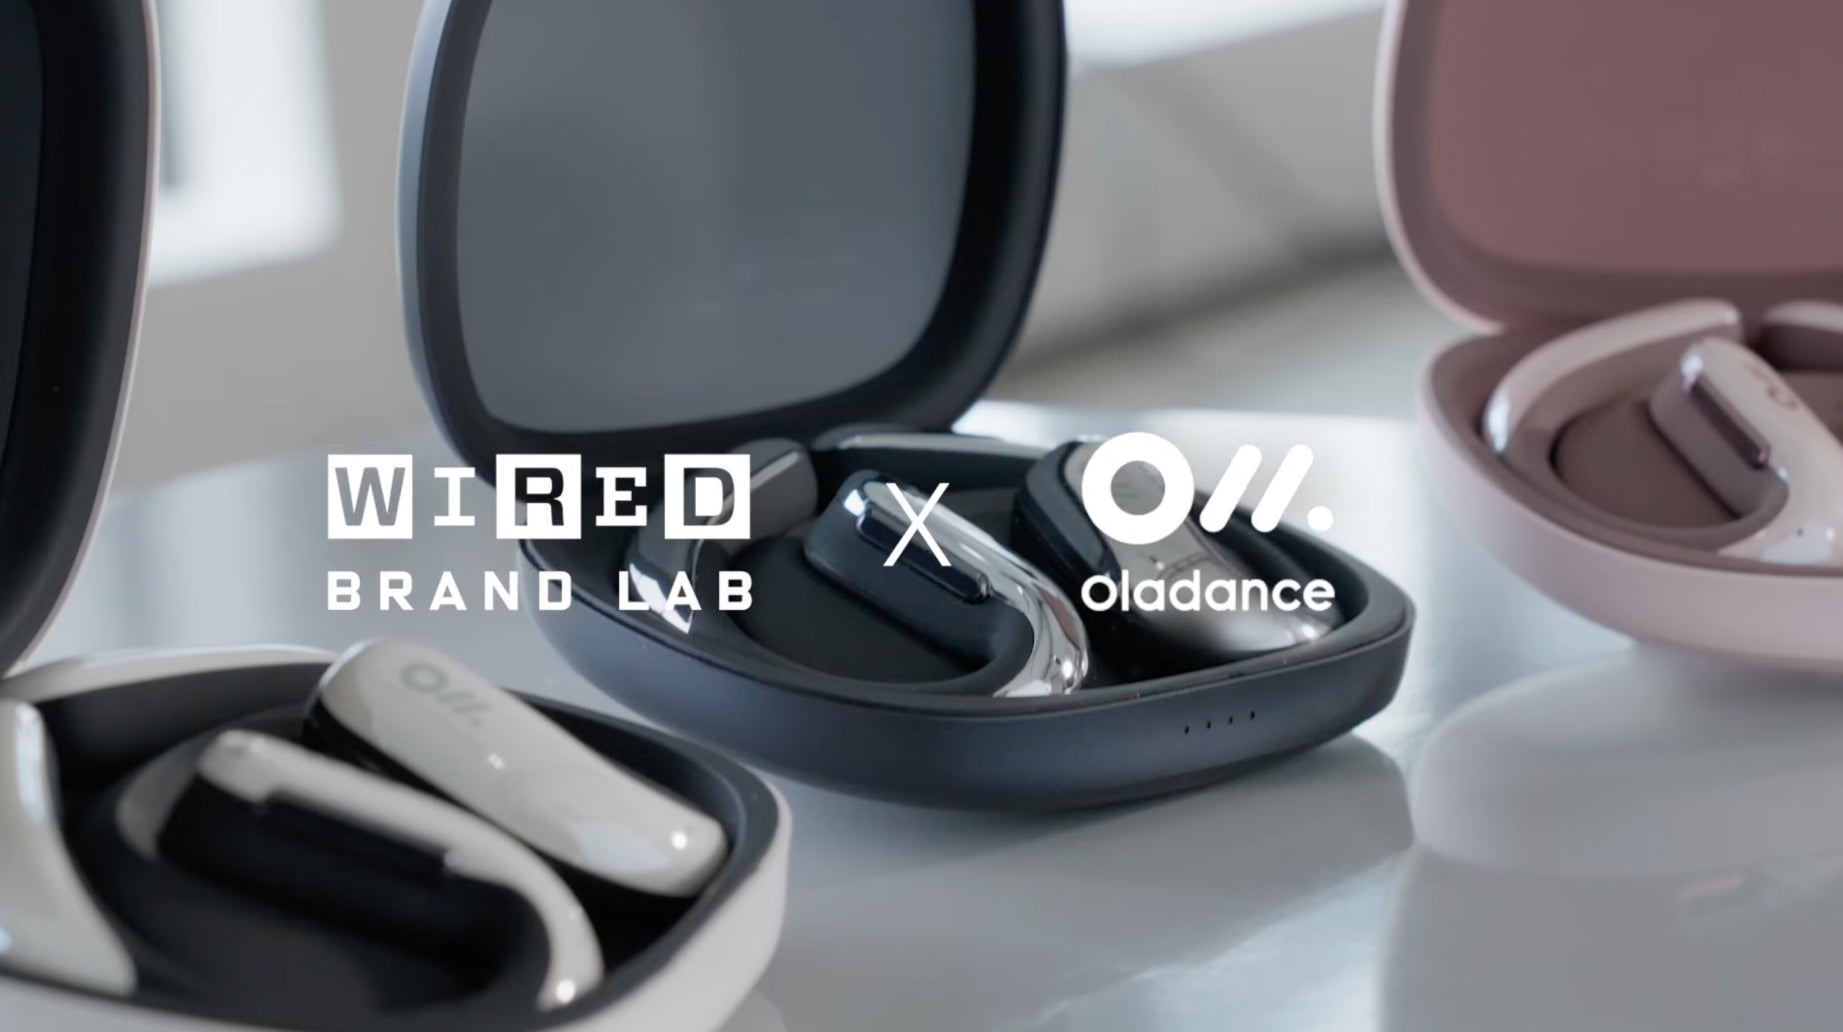 Superior Sound with Oladance | WIRED Brand Lab